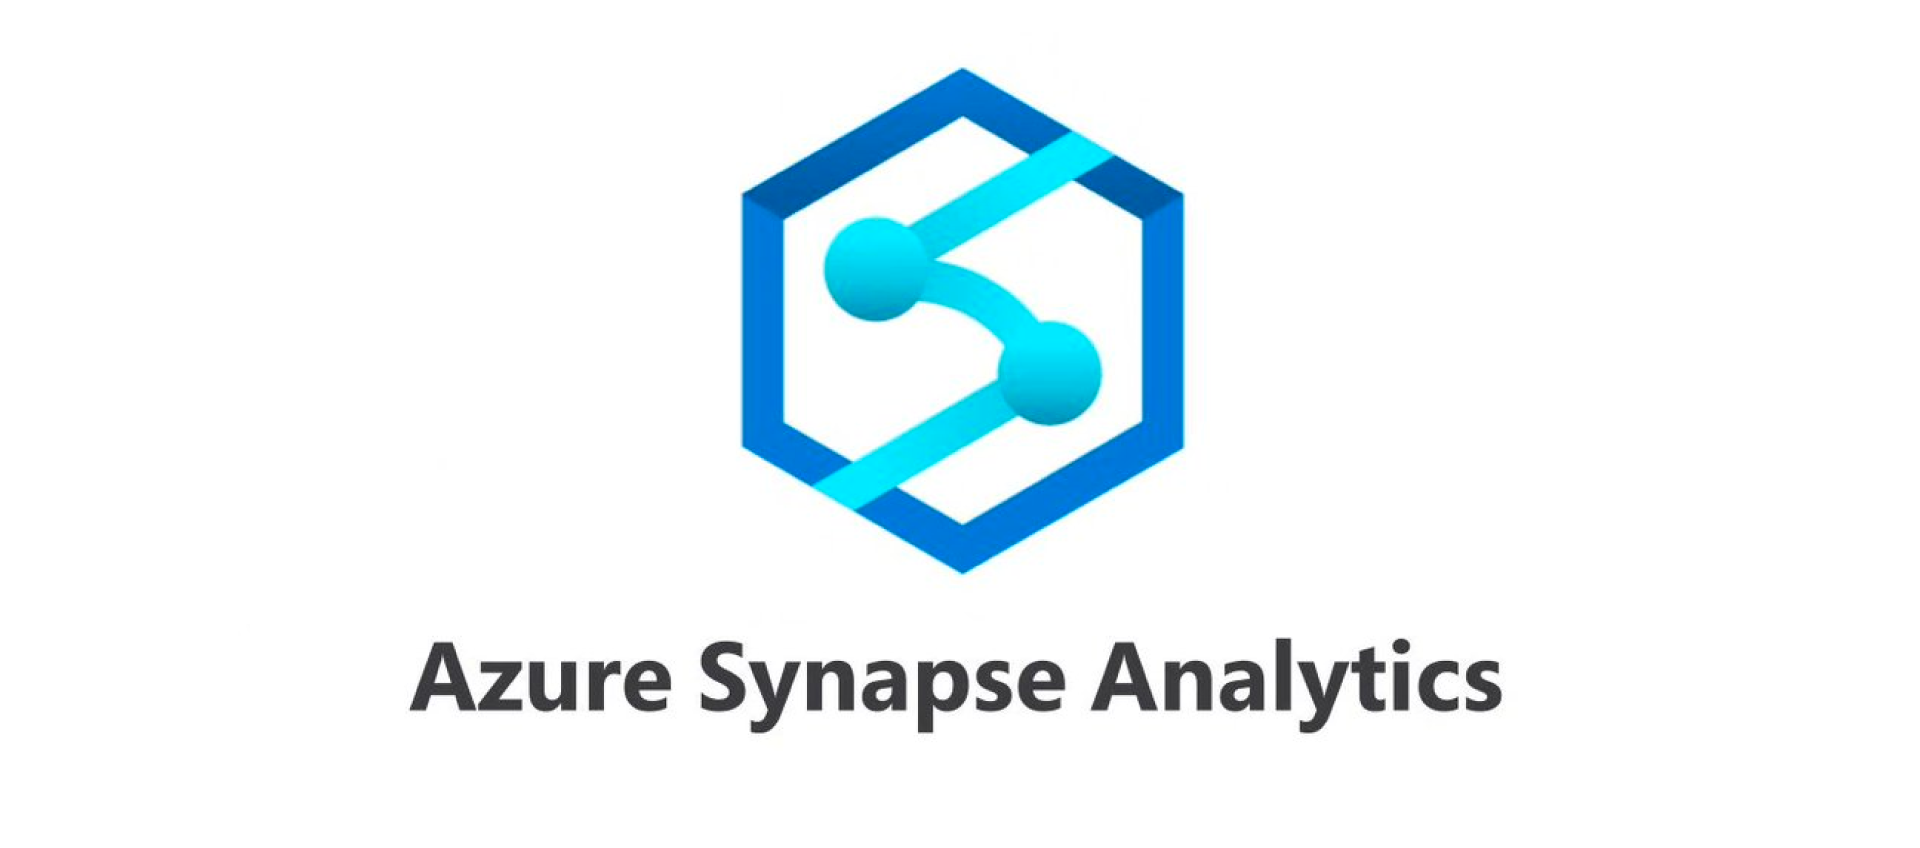 Azure synapse Analytics